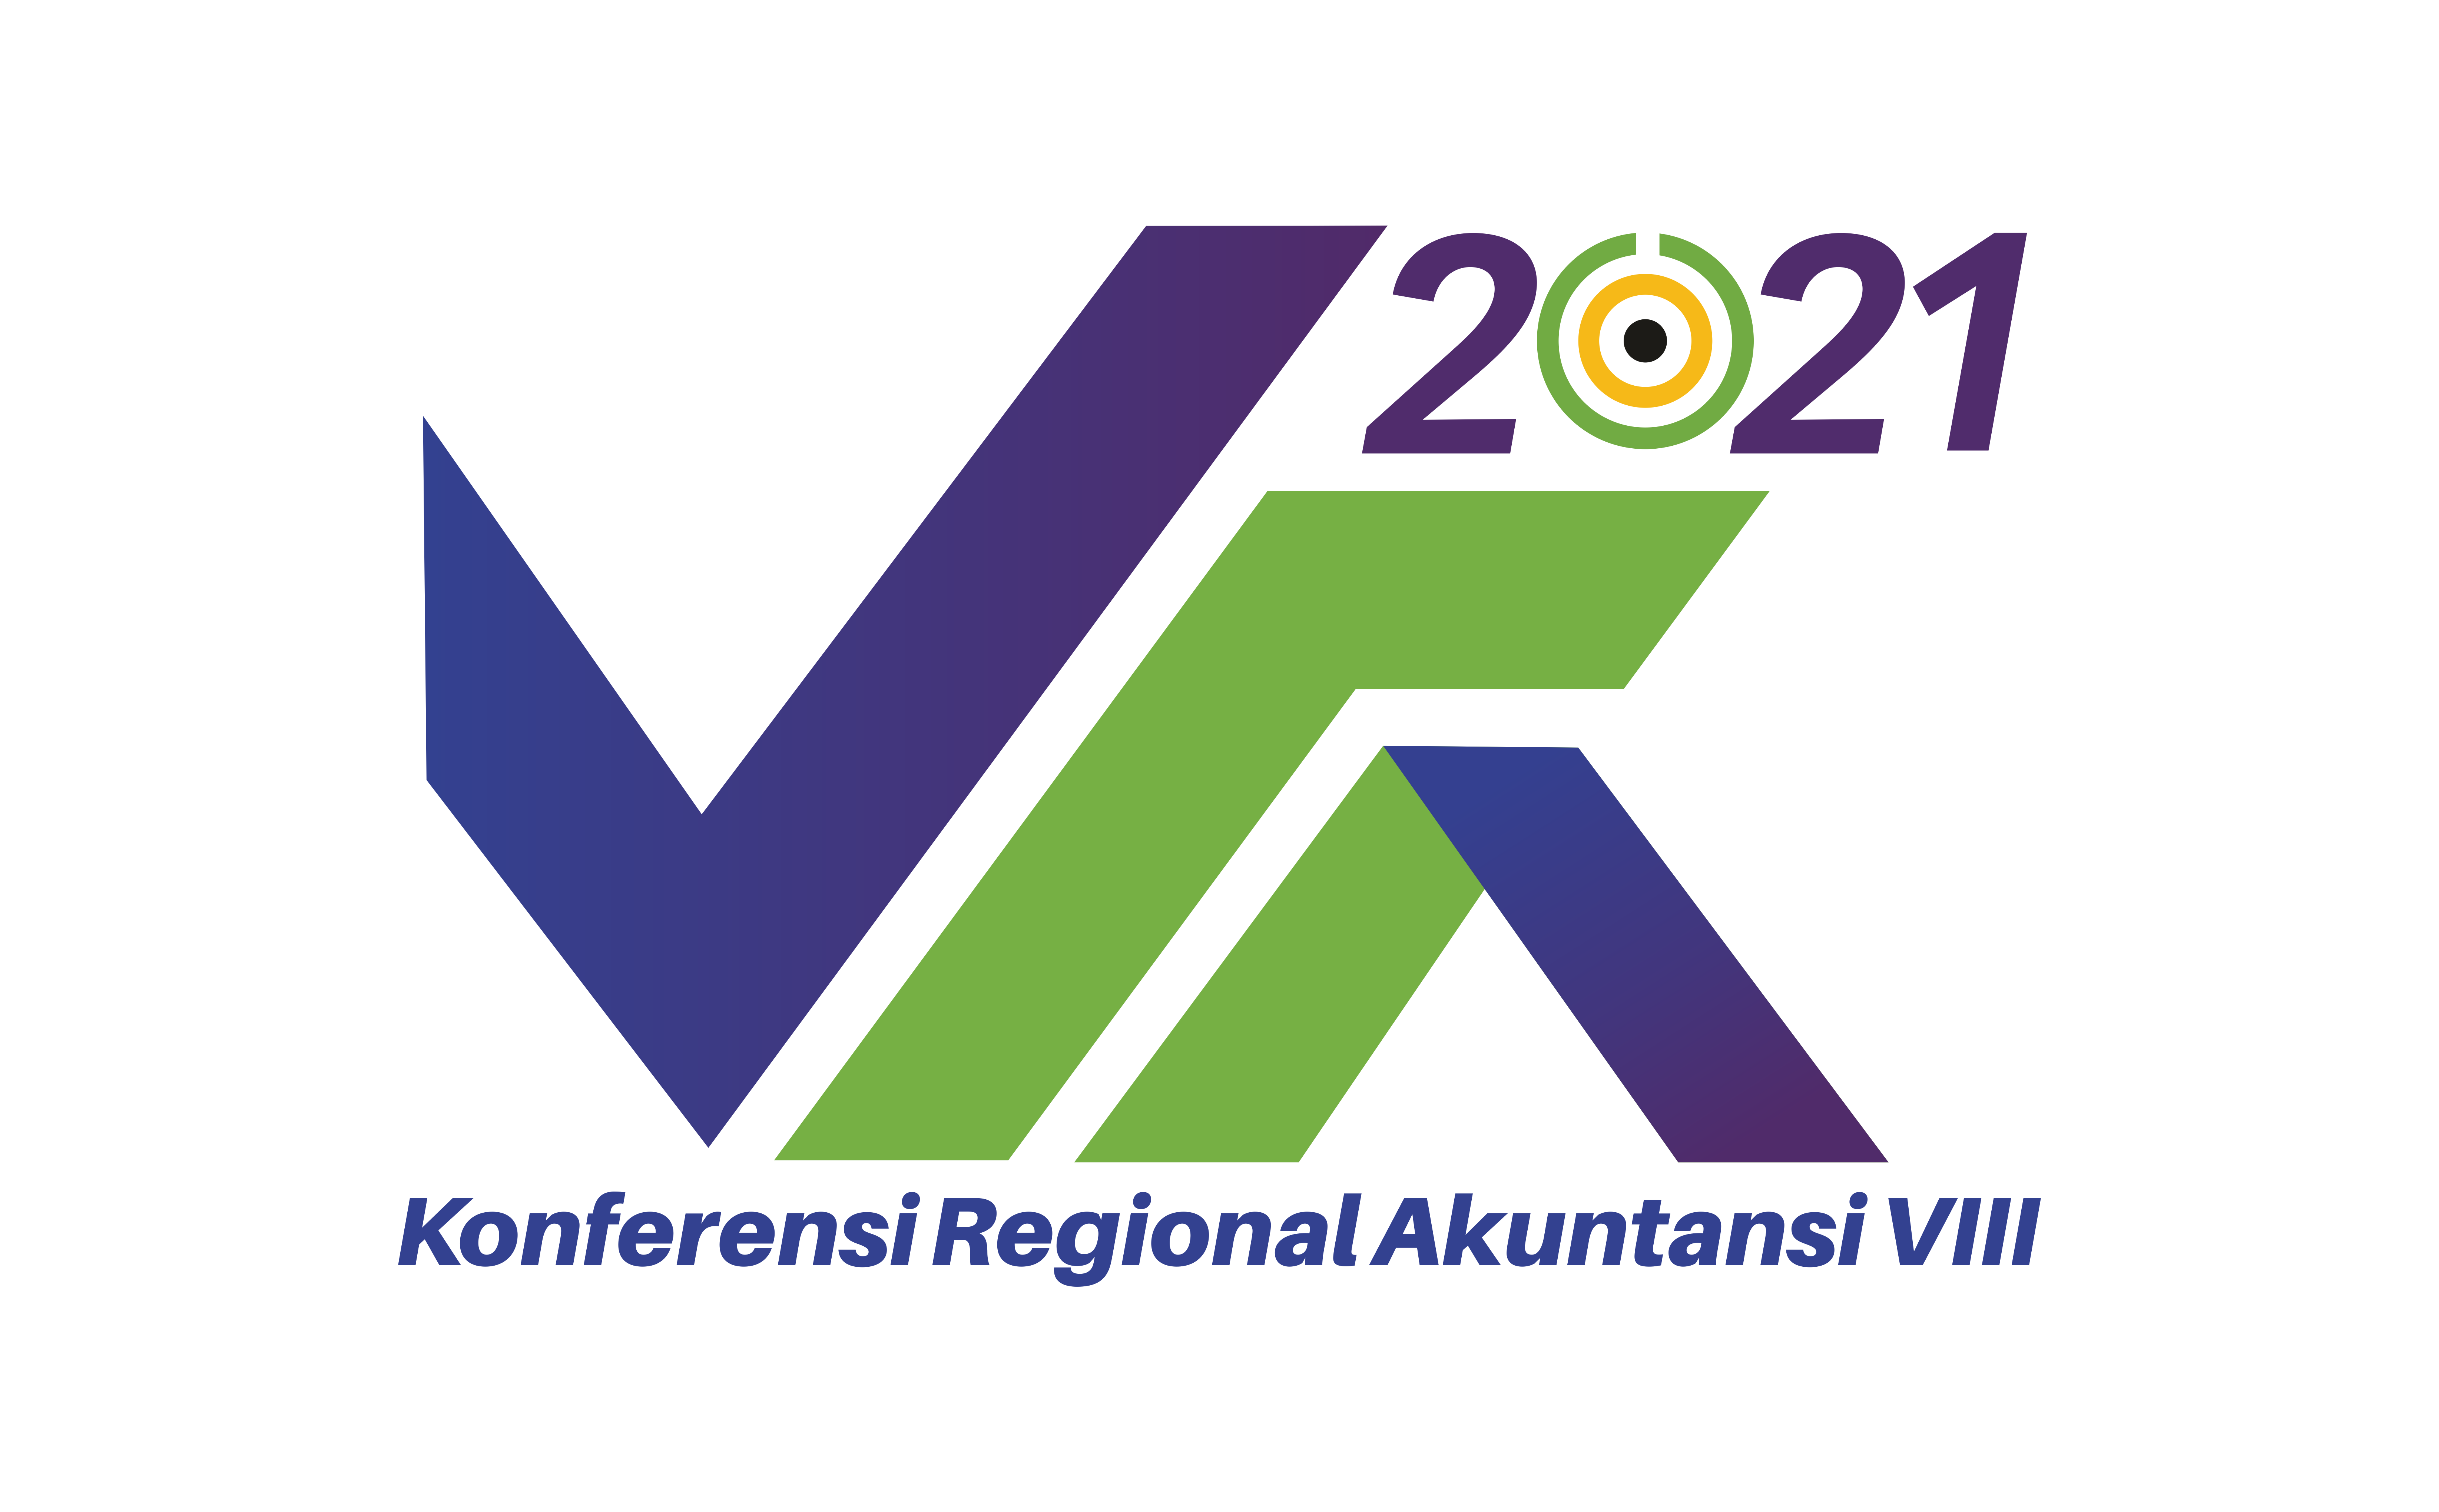 Konferensi Regional Akuntansi VIII 2021